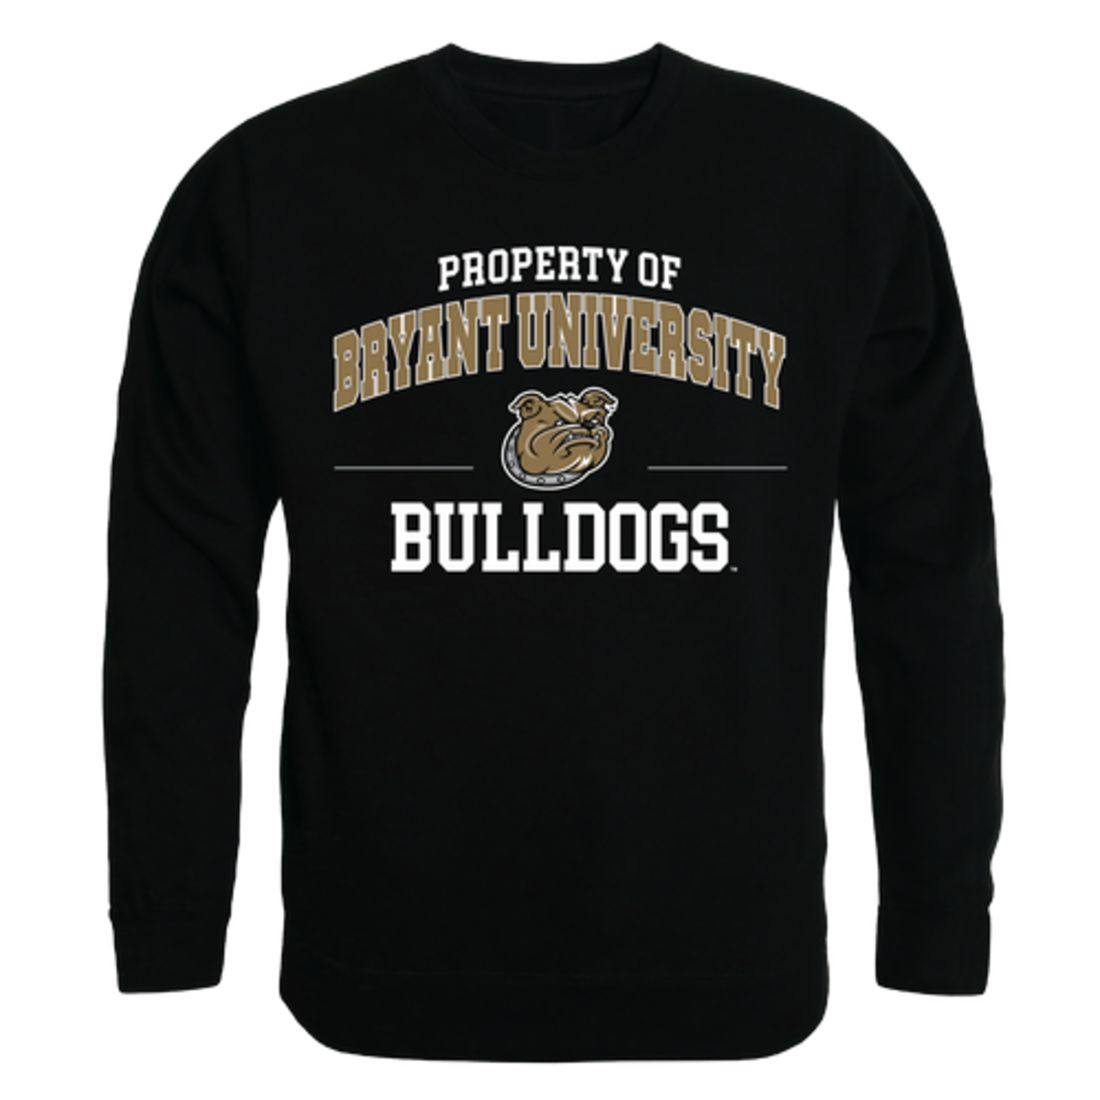 Bryant University Bulldogs Property Crewneck Pullover Sweatshirt Sweater Black-Campus-Wardrobe